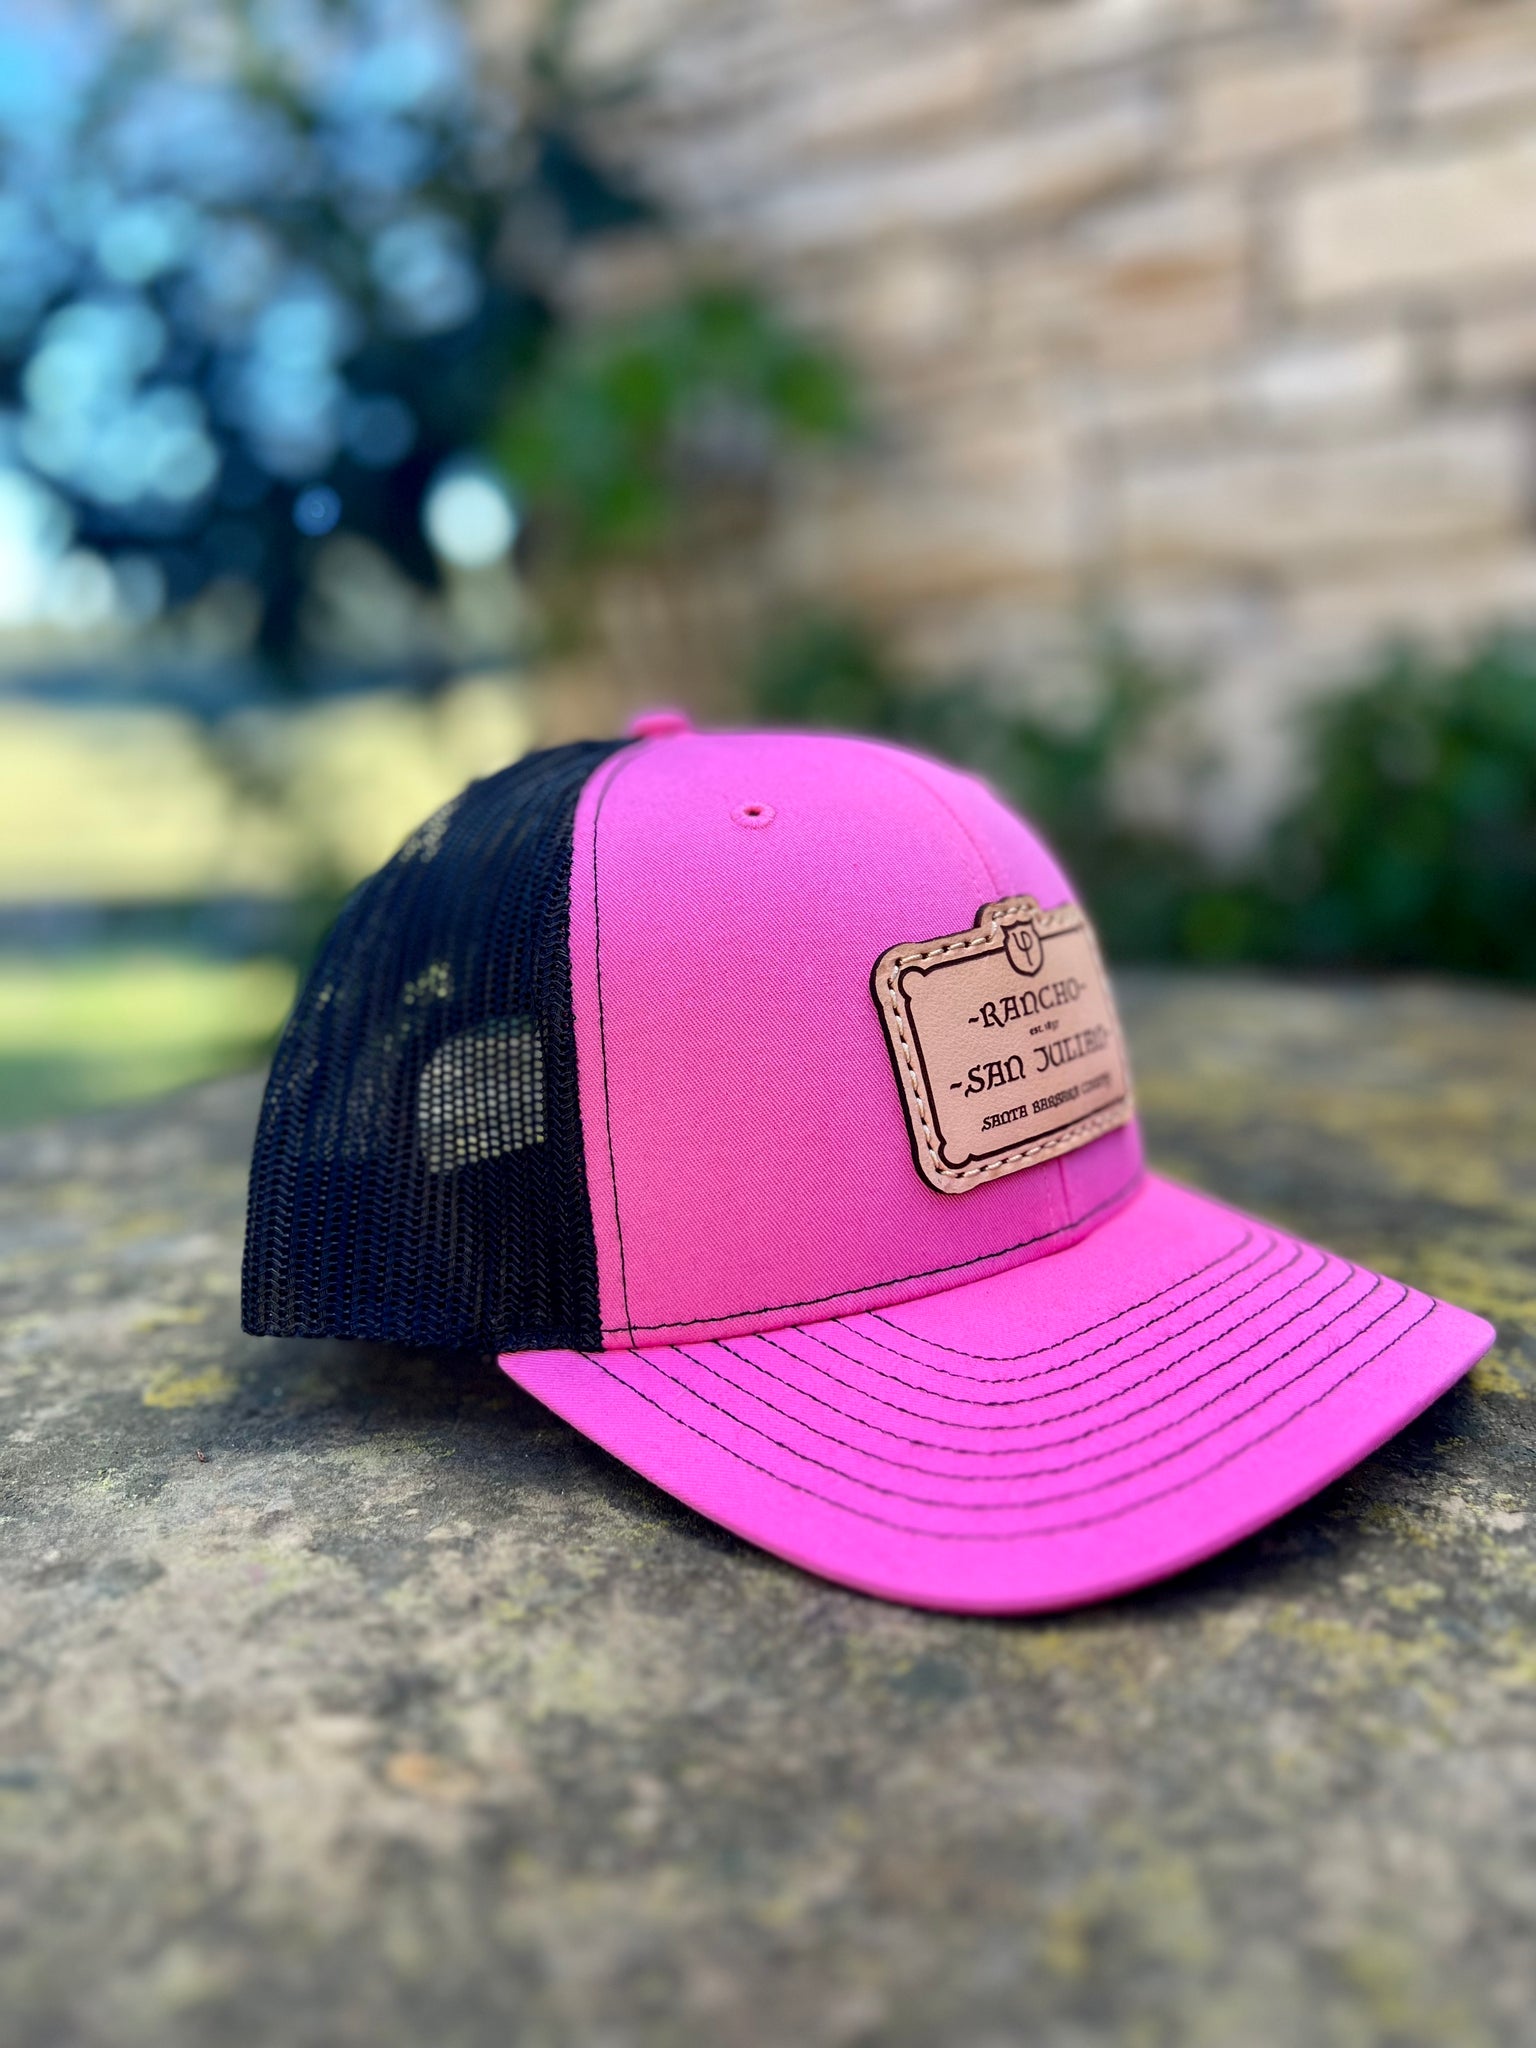 Rancho San Julian Hats Pink/Black Mesh